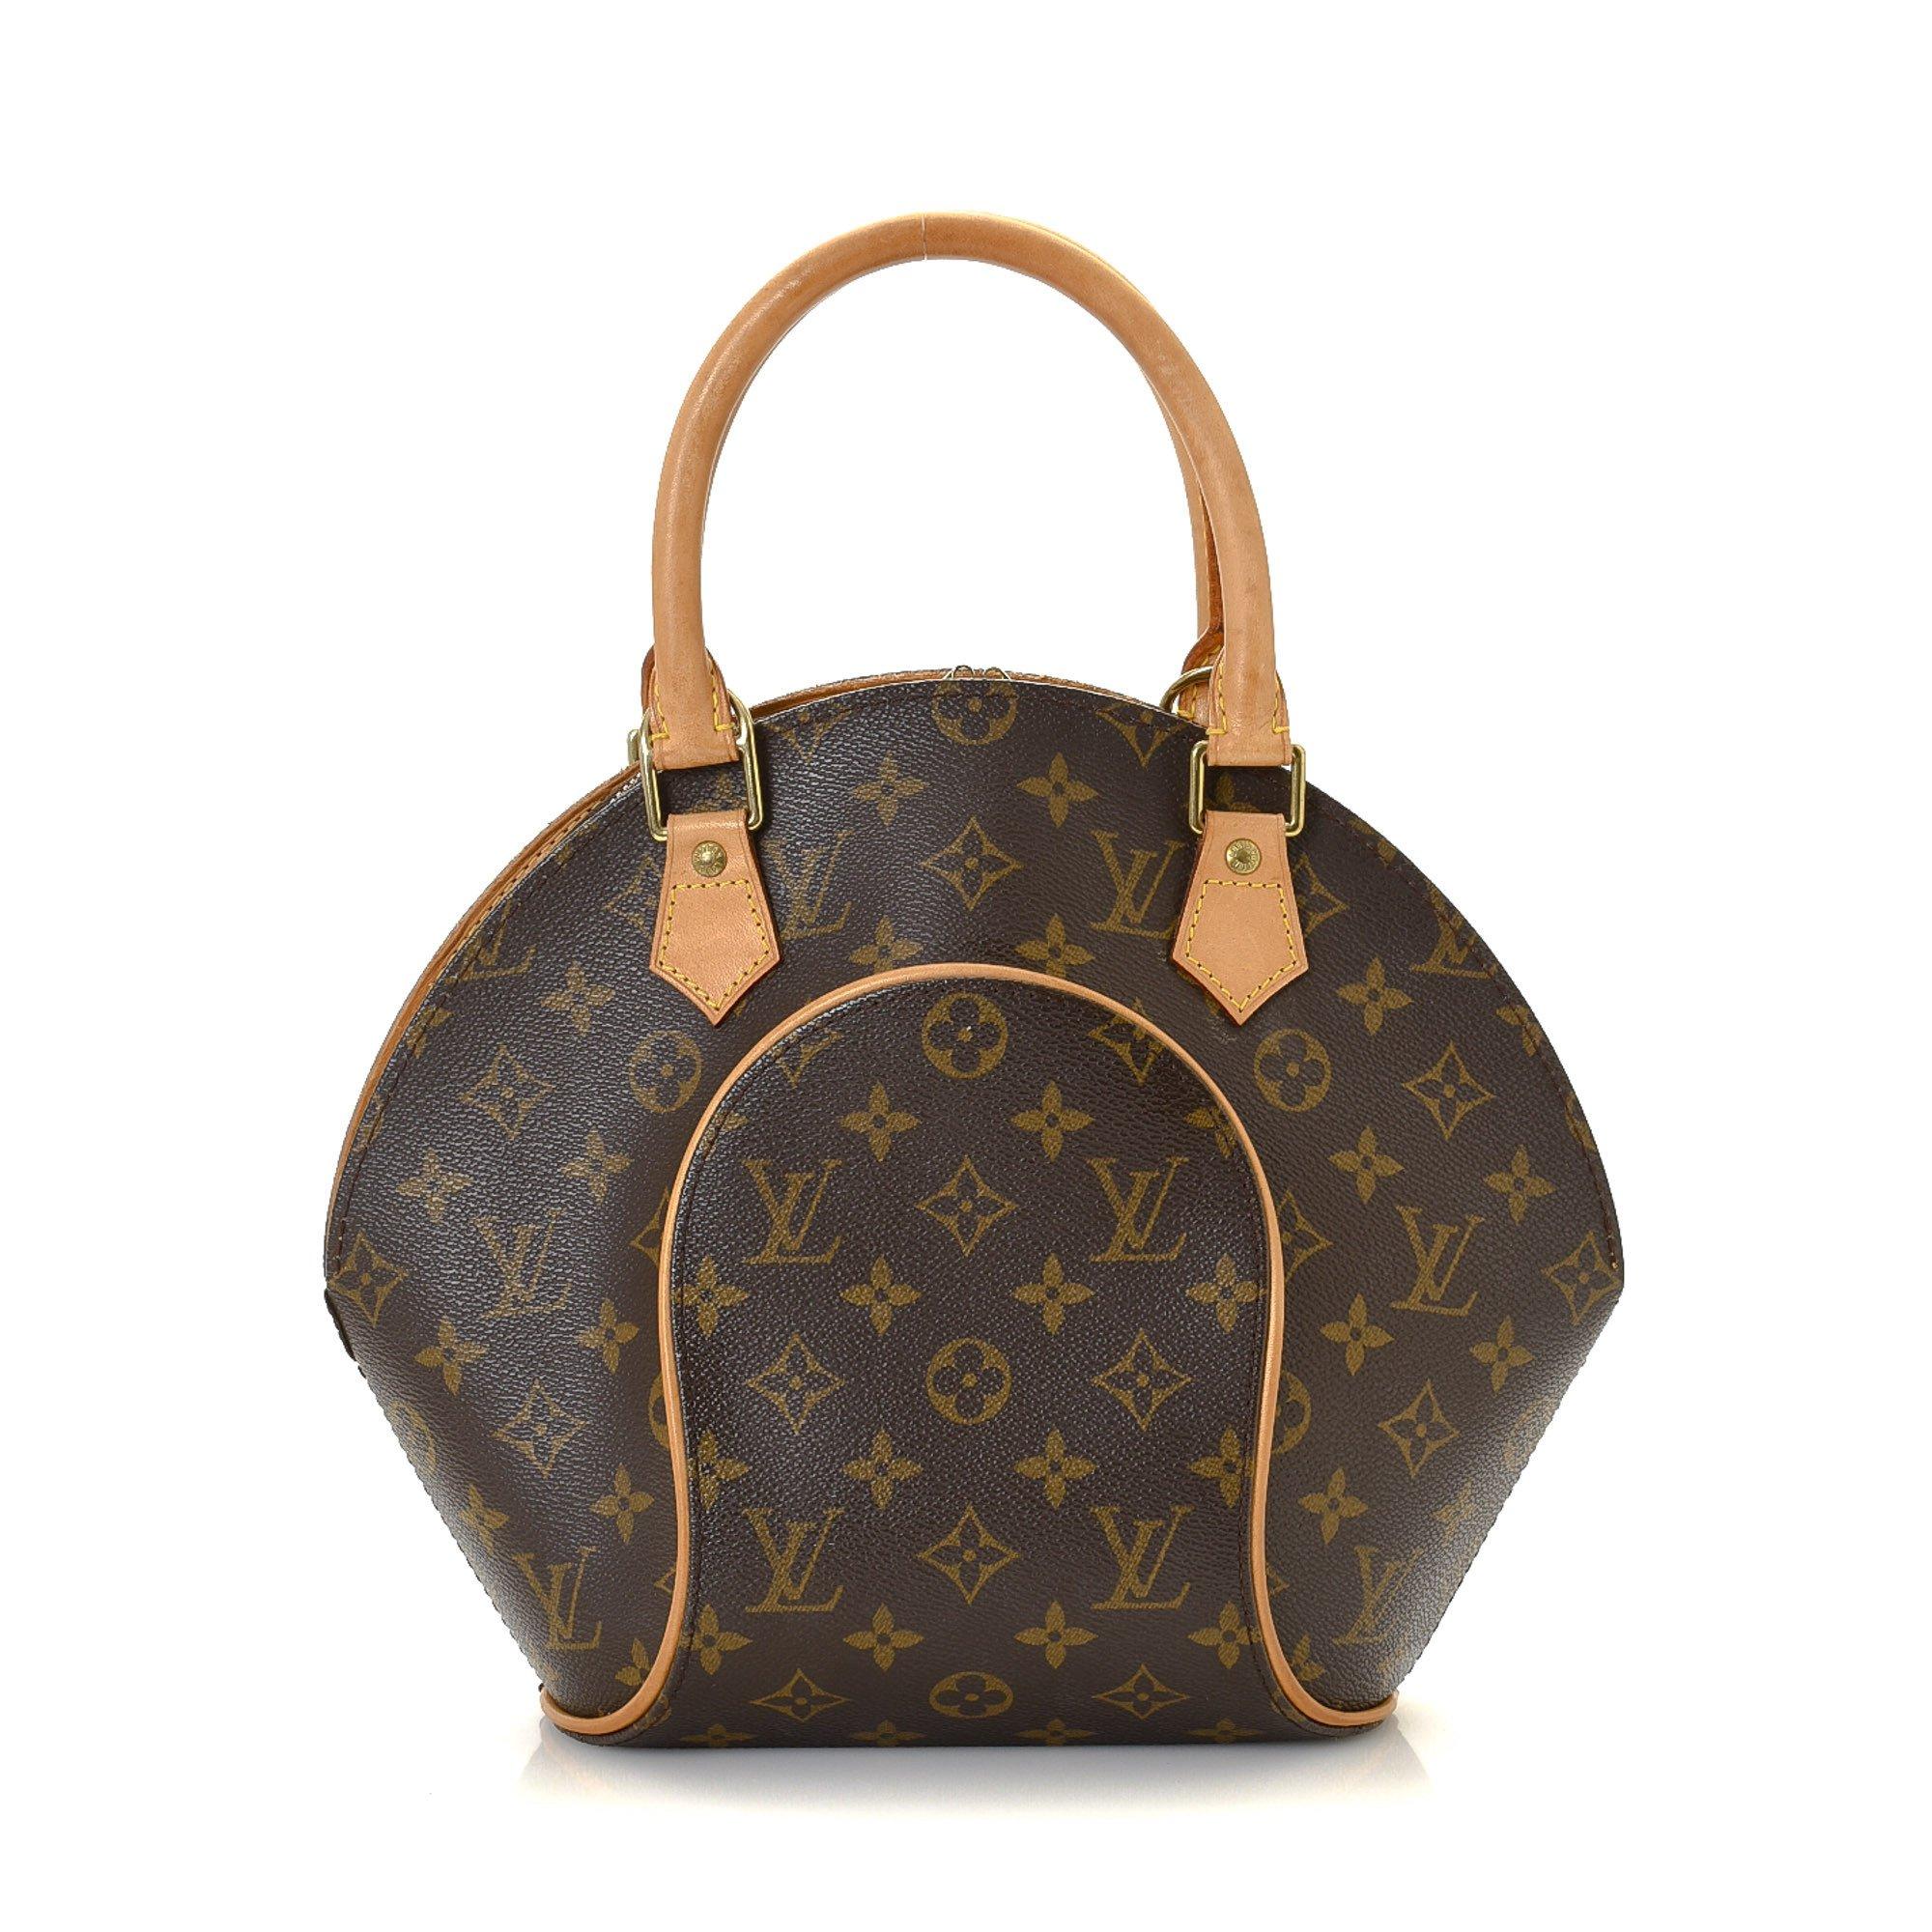 Off-brand Louis Vuitton handbag in Florida : r/mildlyinteresting